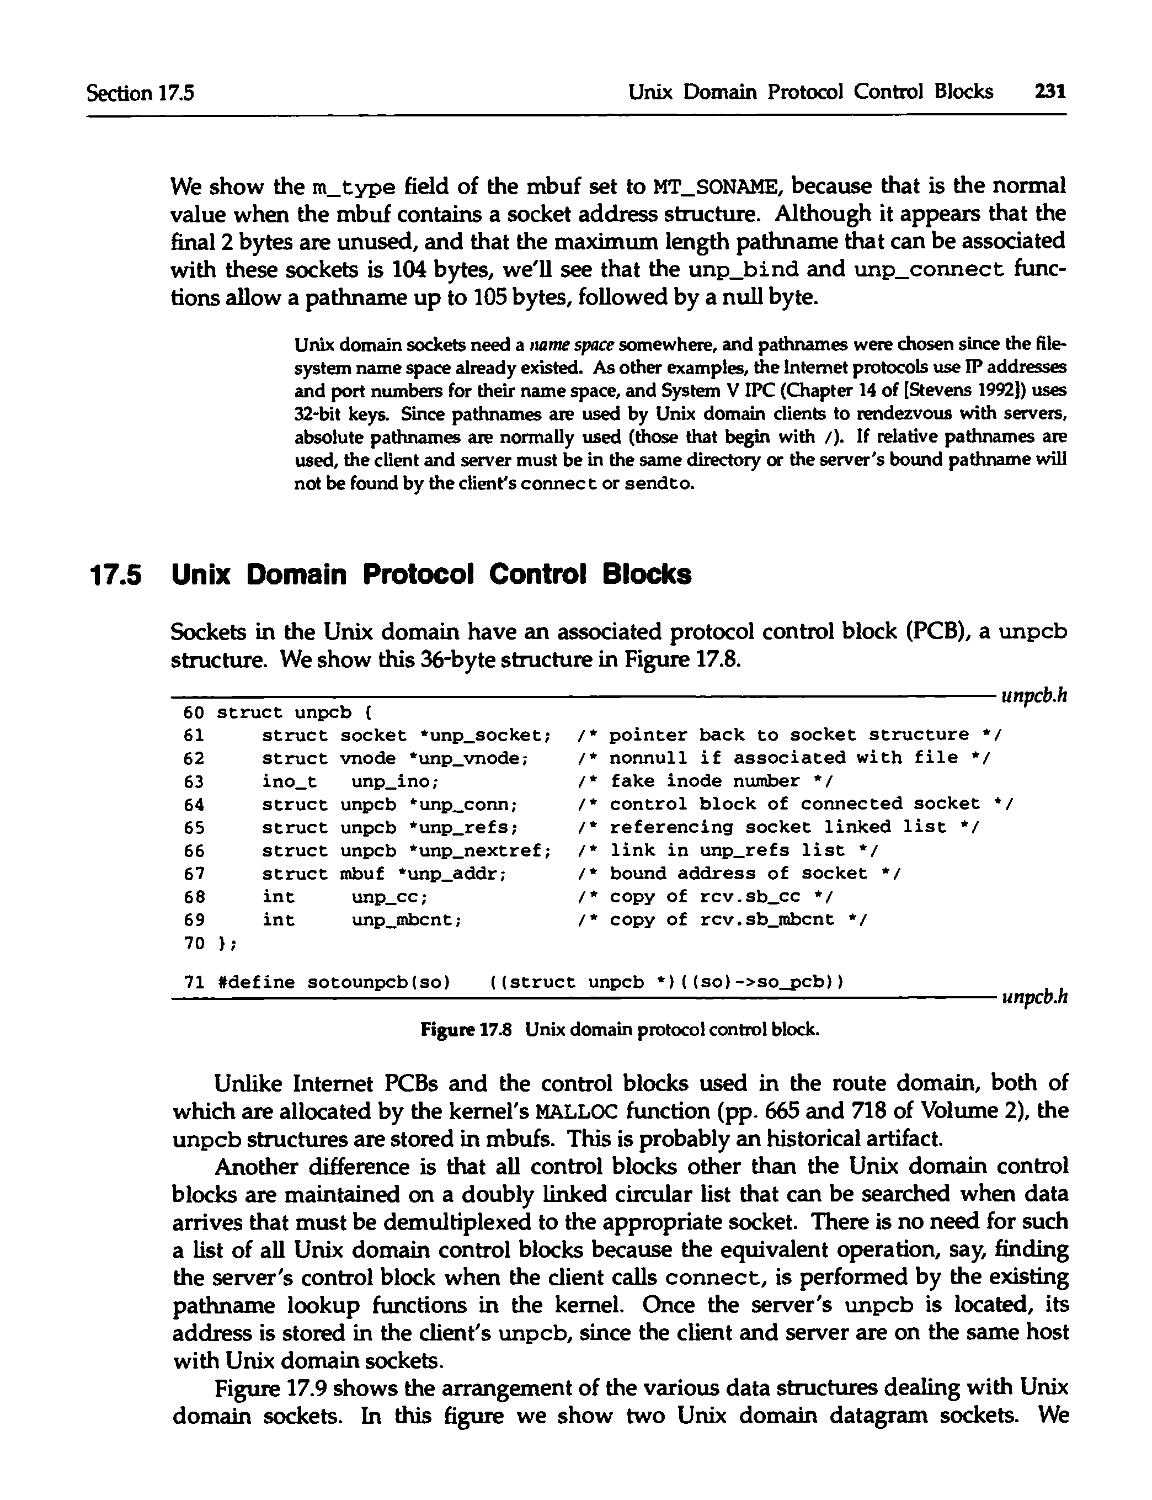 17.5 Unix Domain Protocol Control Blocks